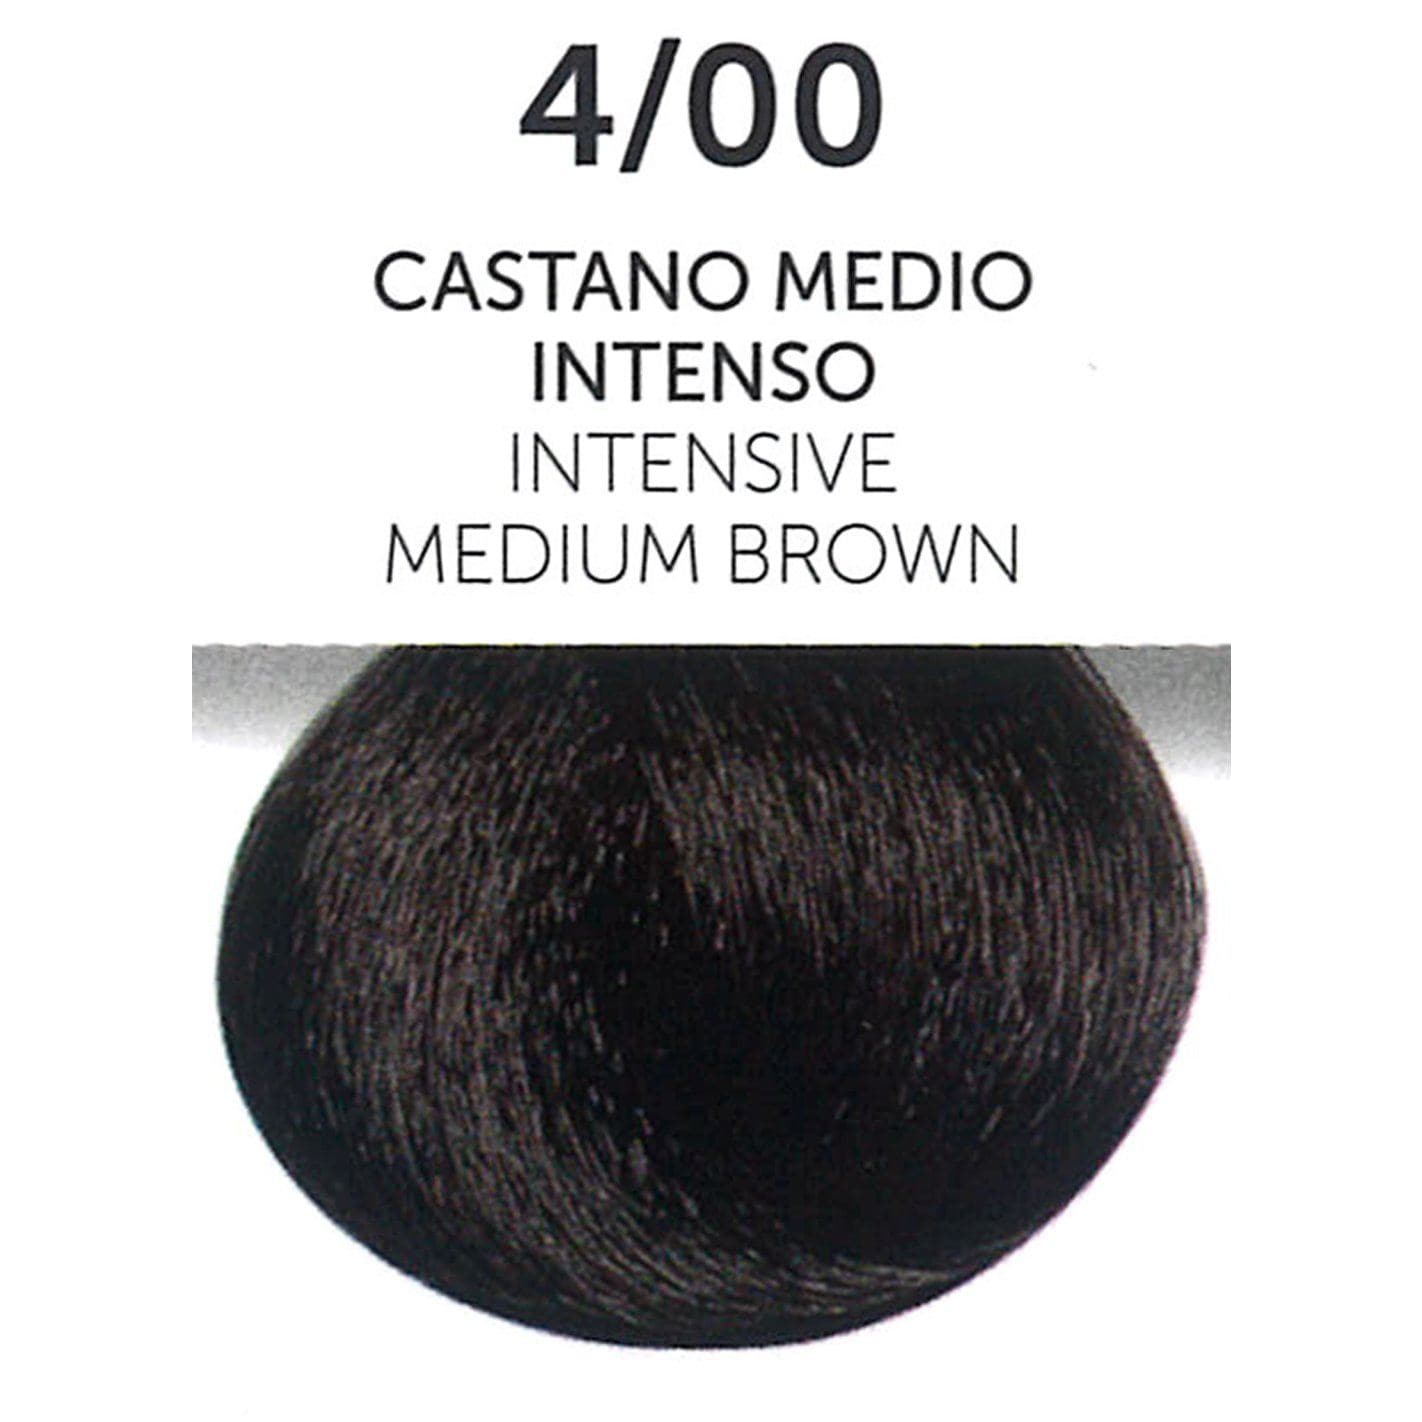 4/00 Intensive Medium Brown | Permanent Hair Color | Perlacolor | OYSTER - SH Salons